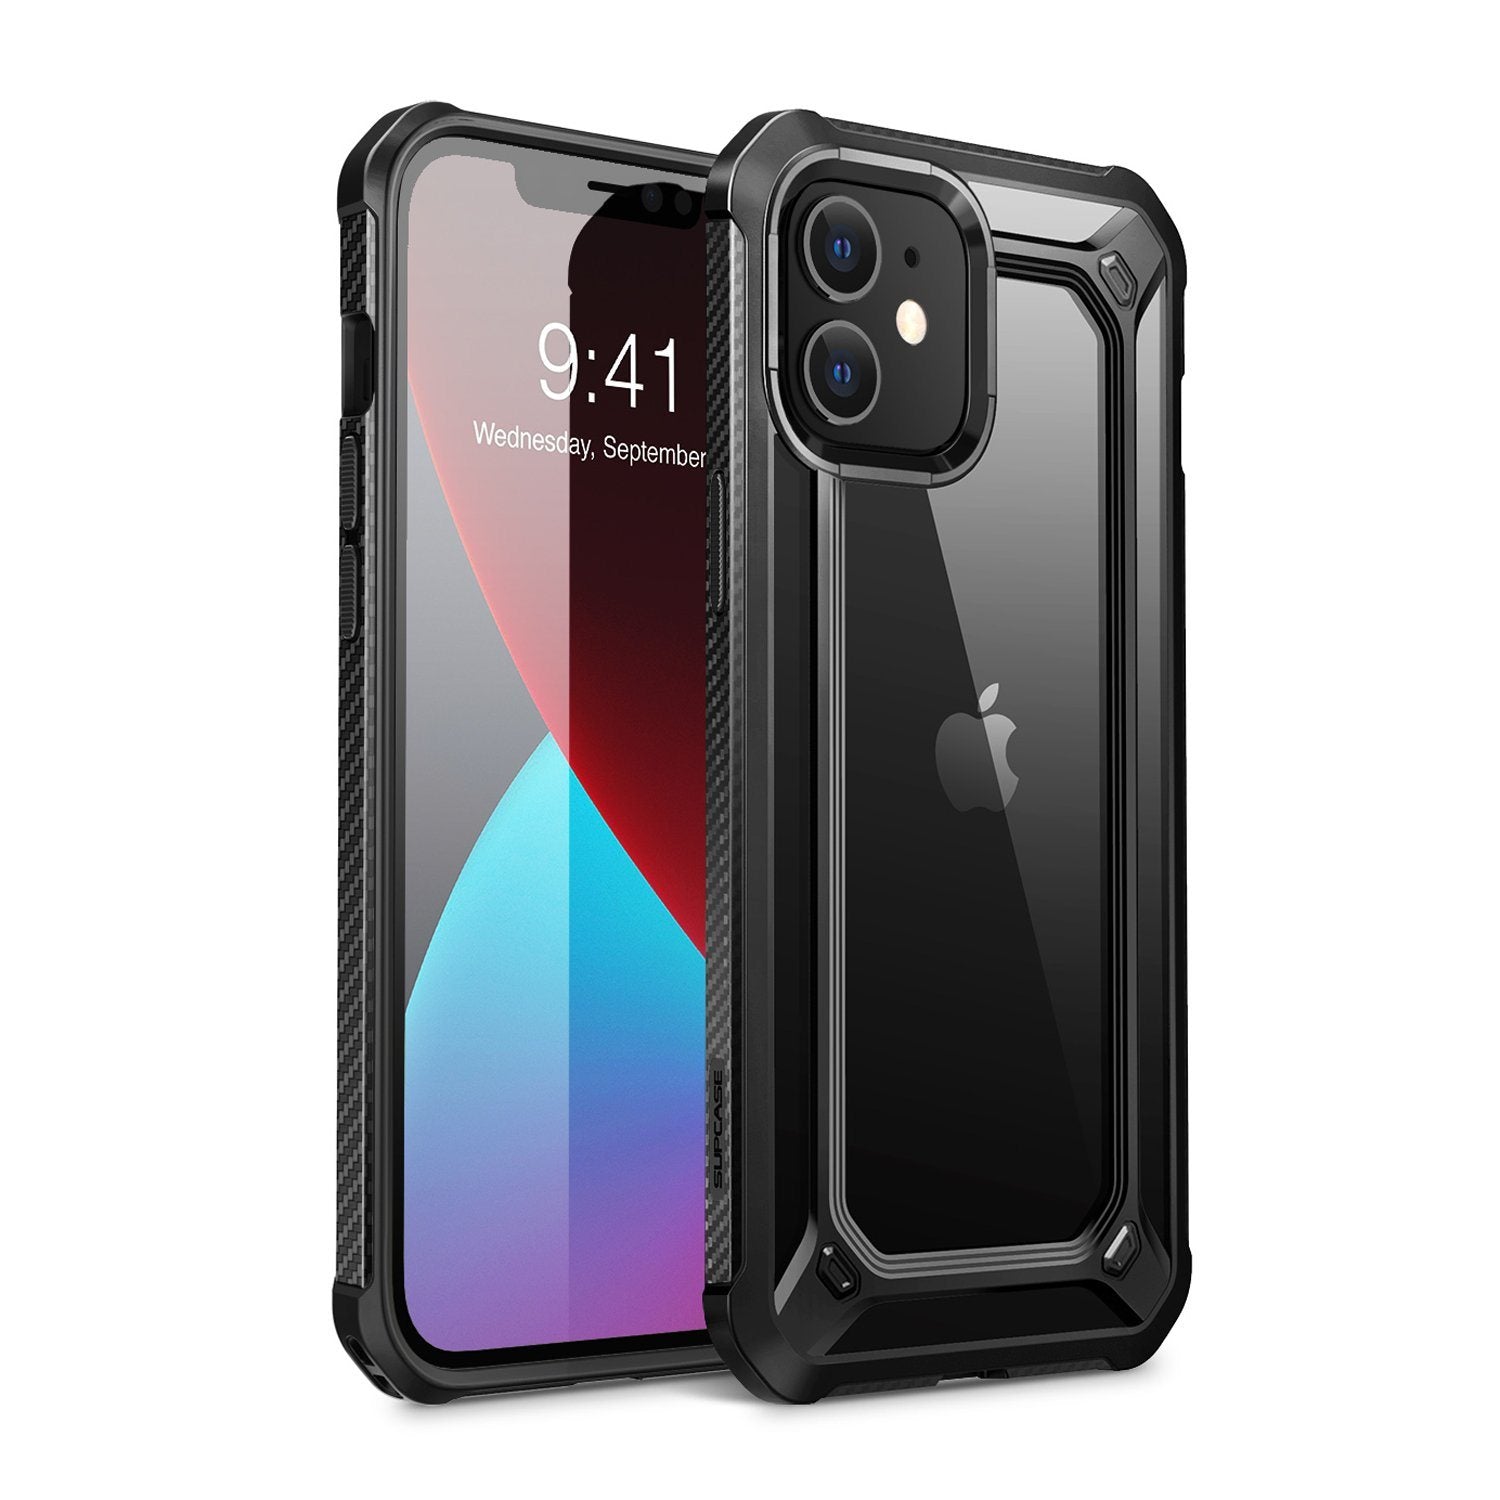 Supcase UB Exo Premium Hybrid Protective Clear Bumper Case for iPhone 12 mini 5.4"(2020), Black Default Supcase 